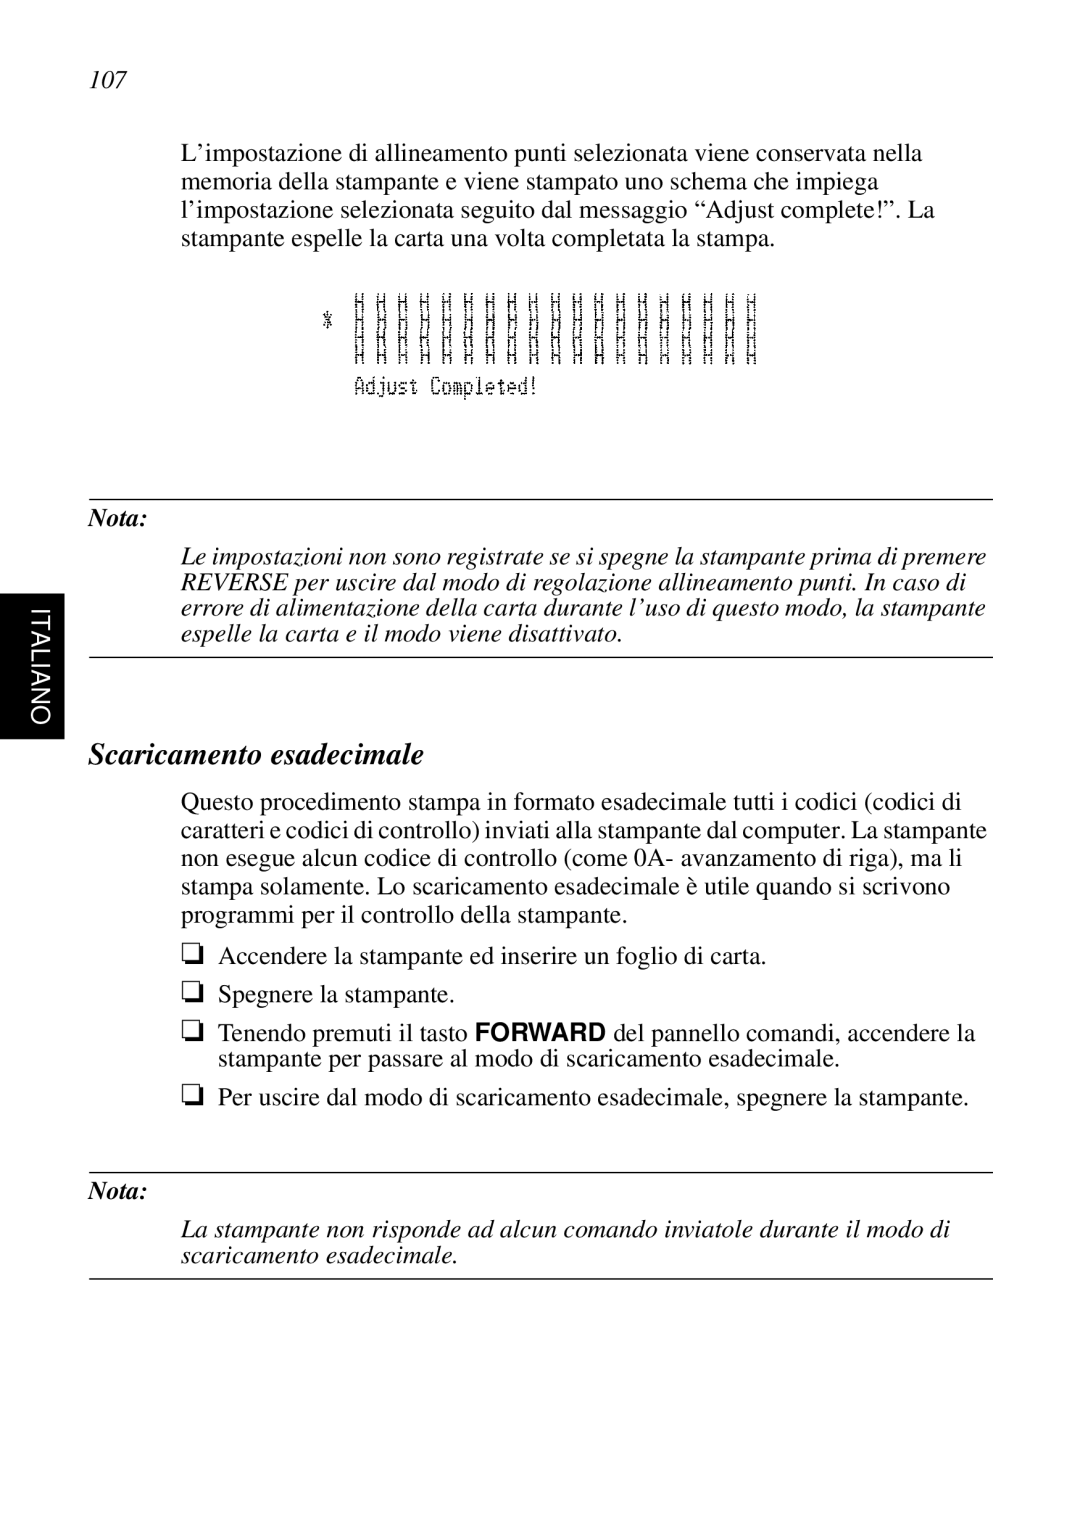 Star Micronics SP298 user manual Scaricamento esadecimale, Italiano, Nota 